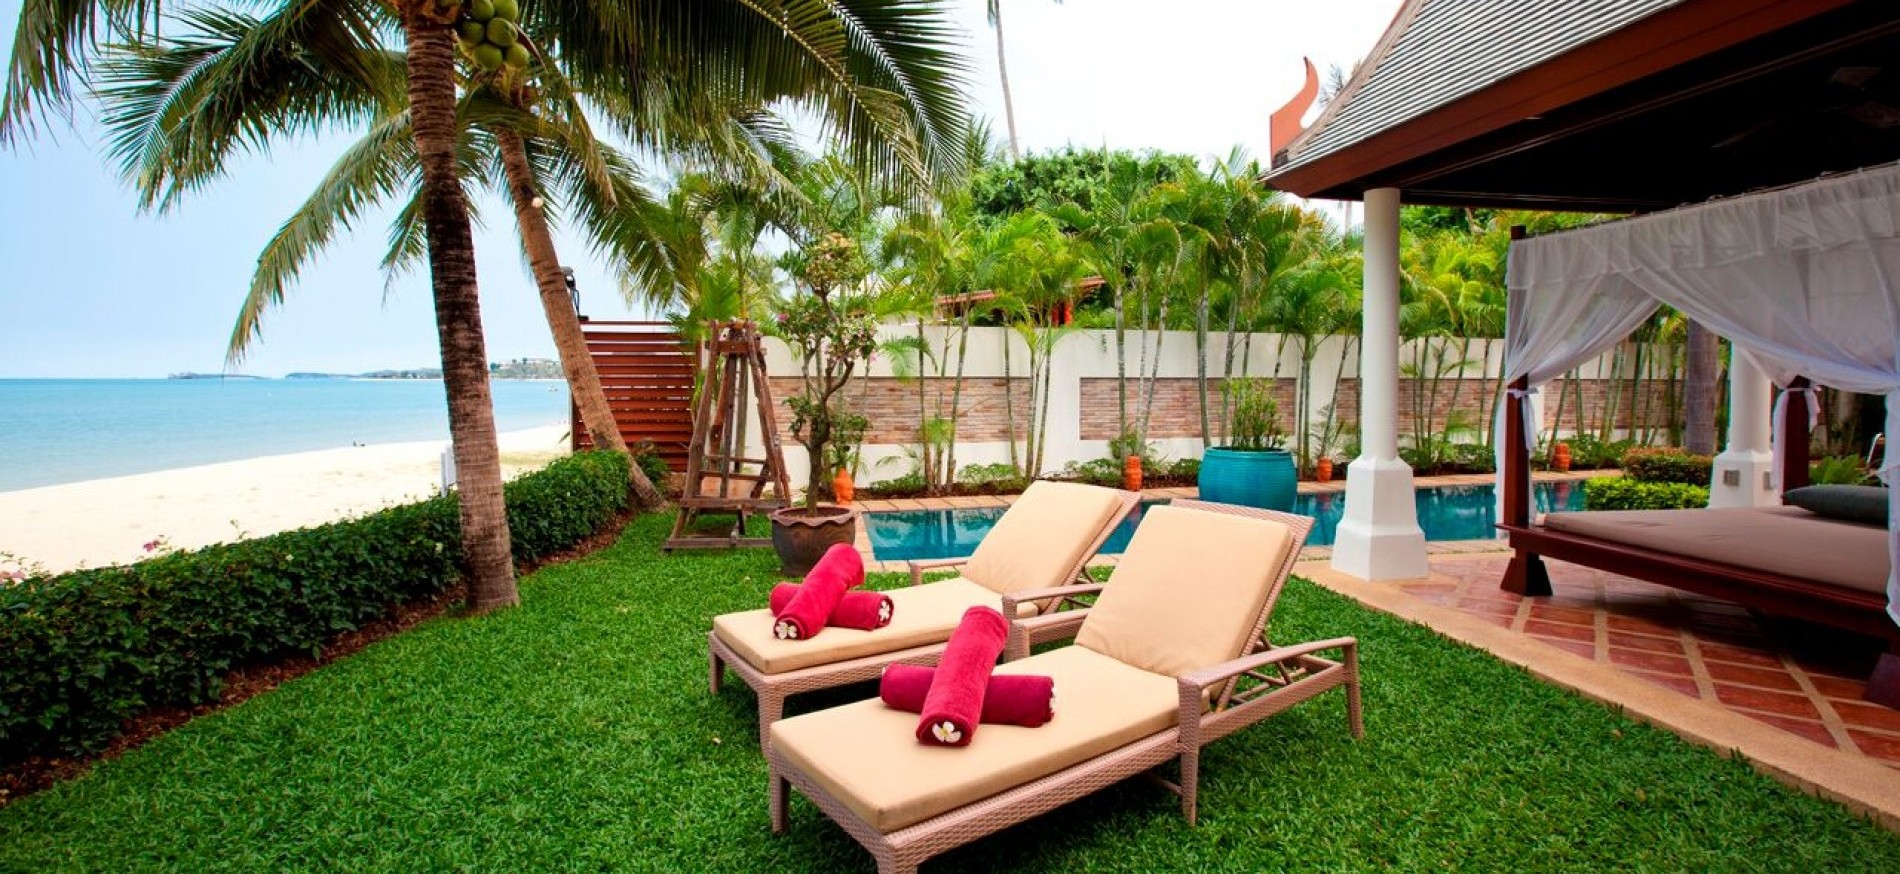 Luxury-villa-Bougainvillea-4-Bedrooms-Thailand-Beach-front